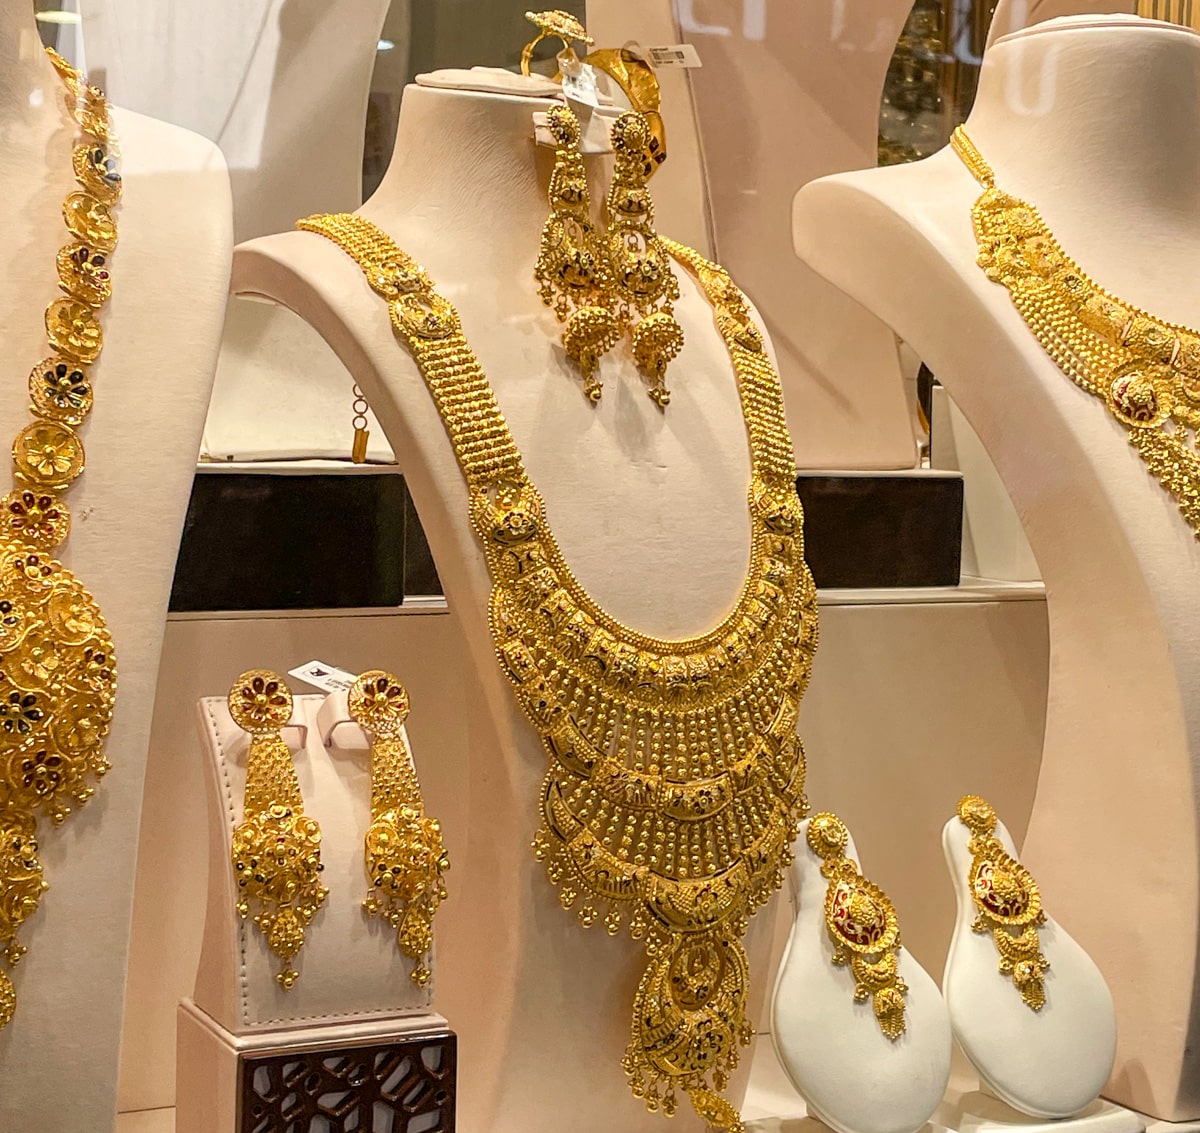 Targ złota (Gold Souk) w Dubaju